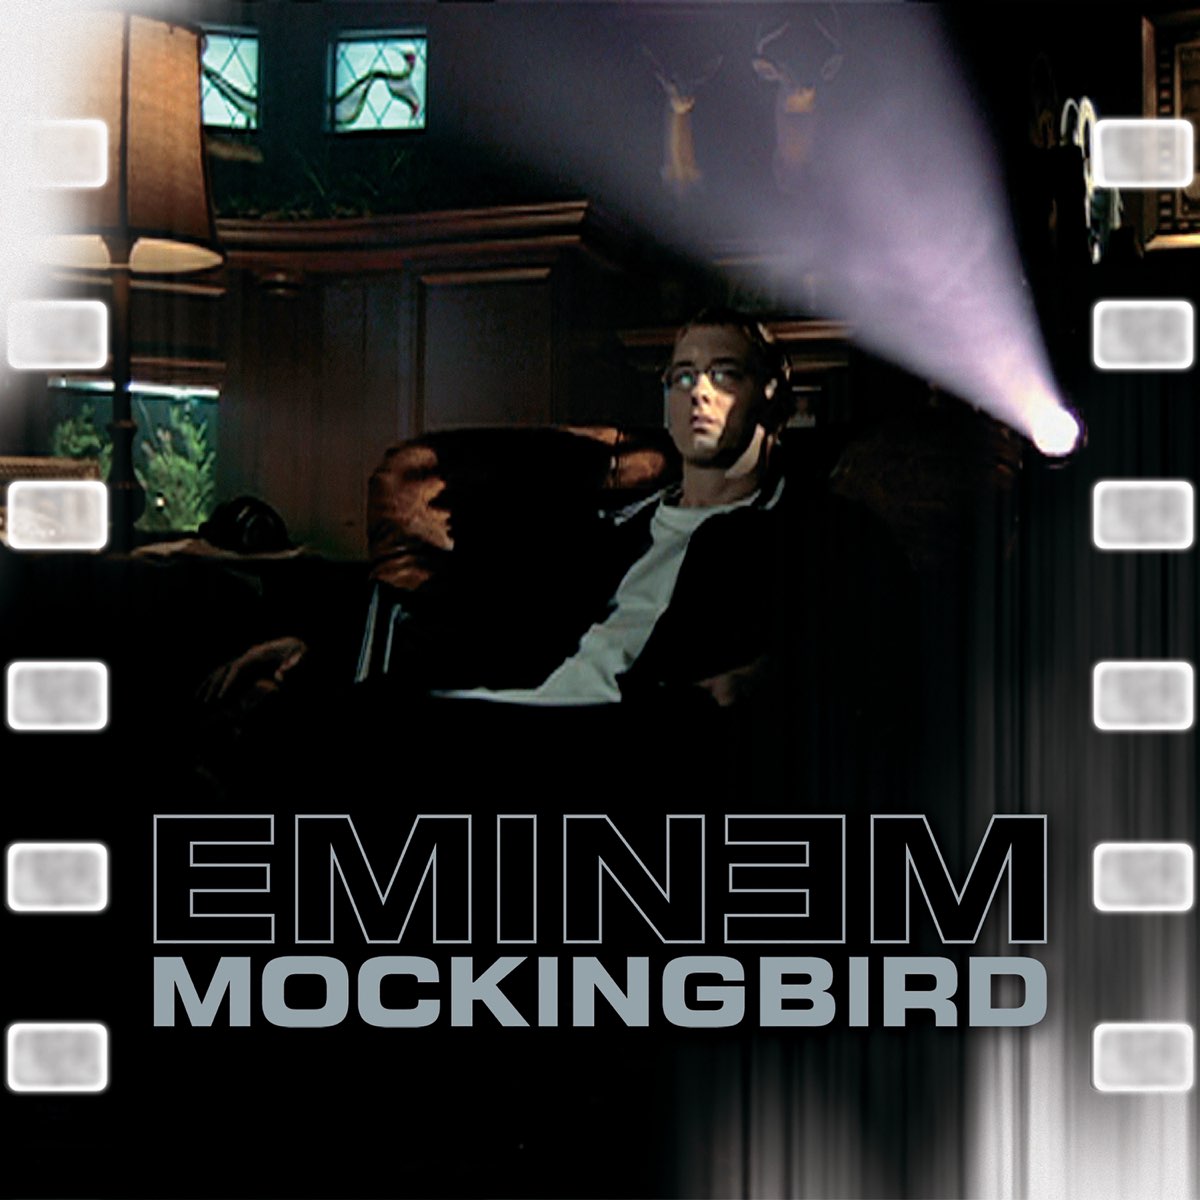 Mockingbird - Single - Album by Eminem - Apple Music